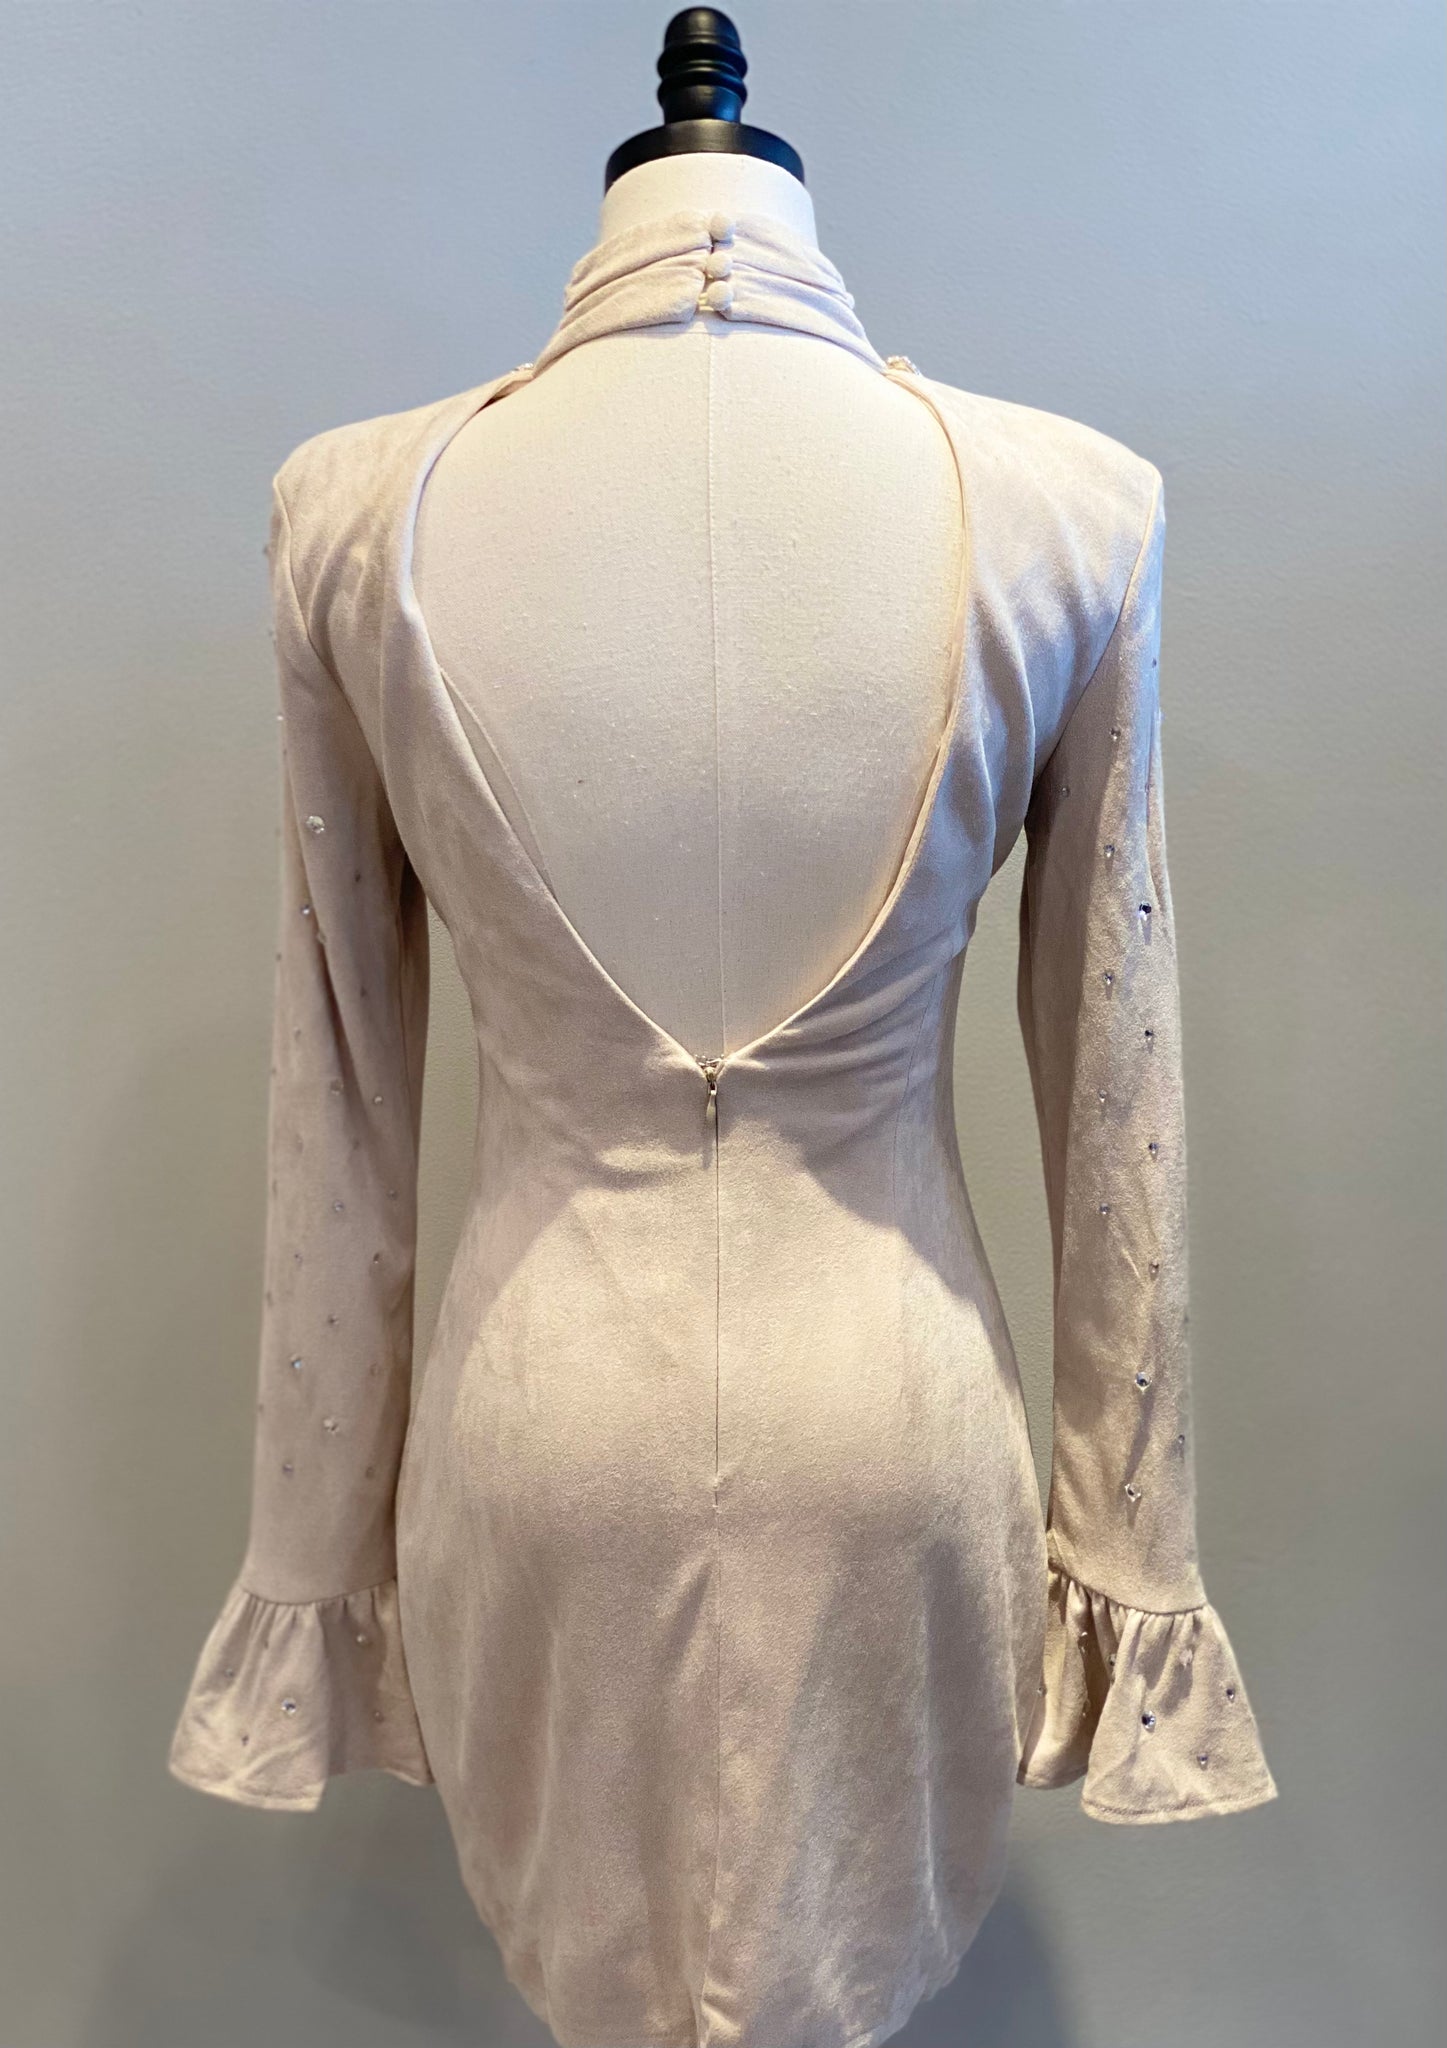 Rhinestone Detailed Dress